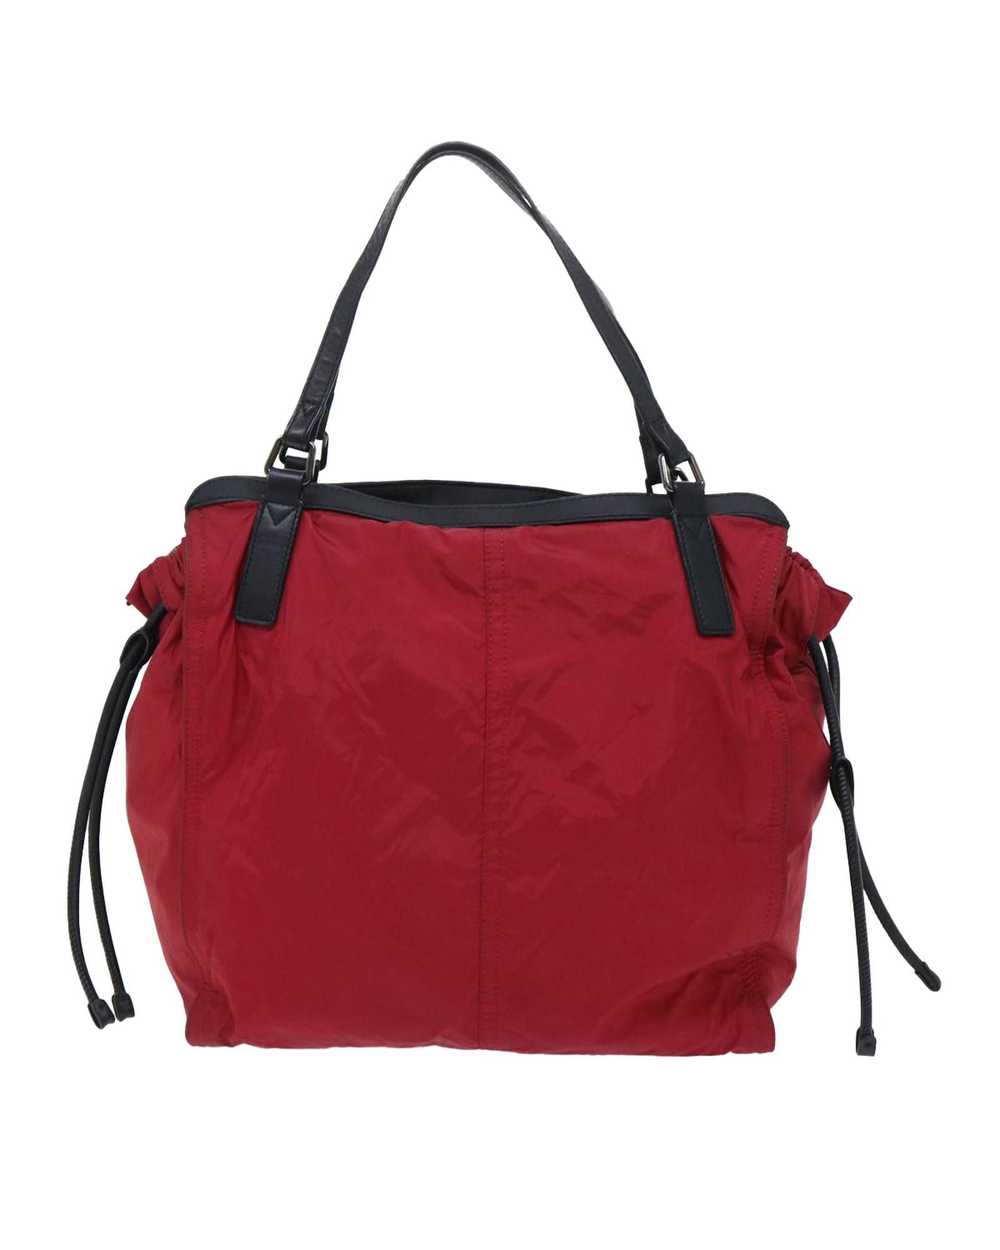 Burberry Red Nylon Leather Shoulder Bag - image 2